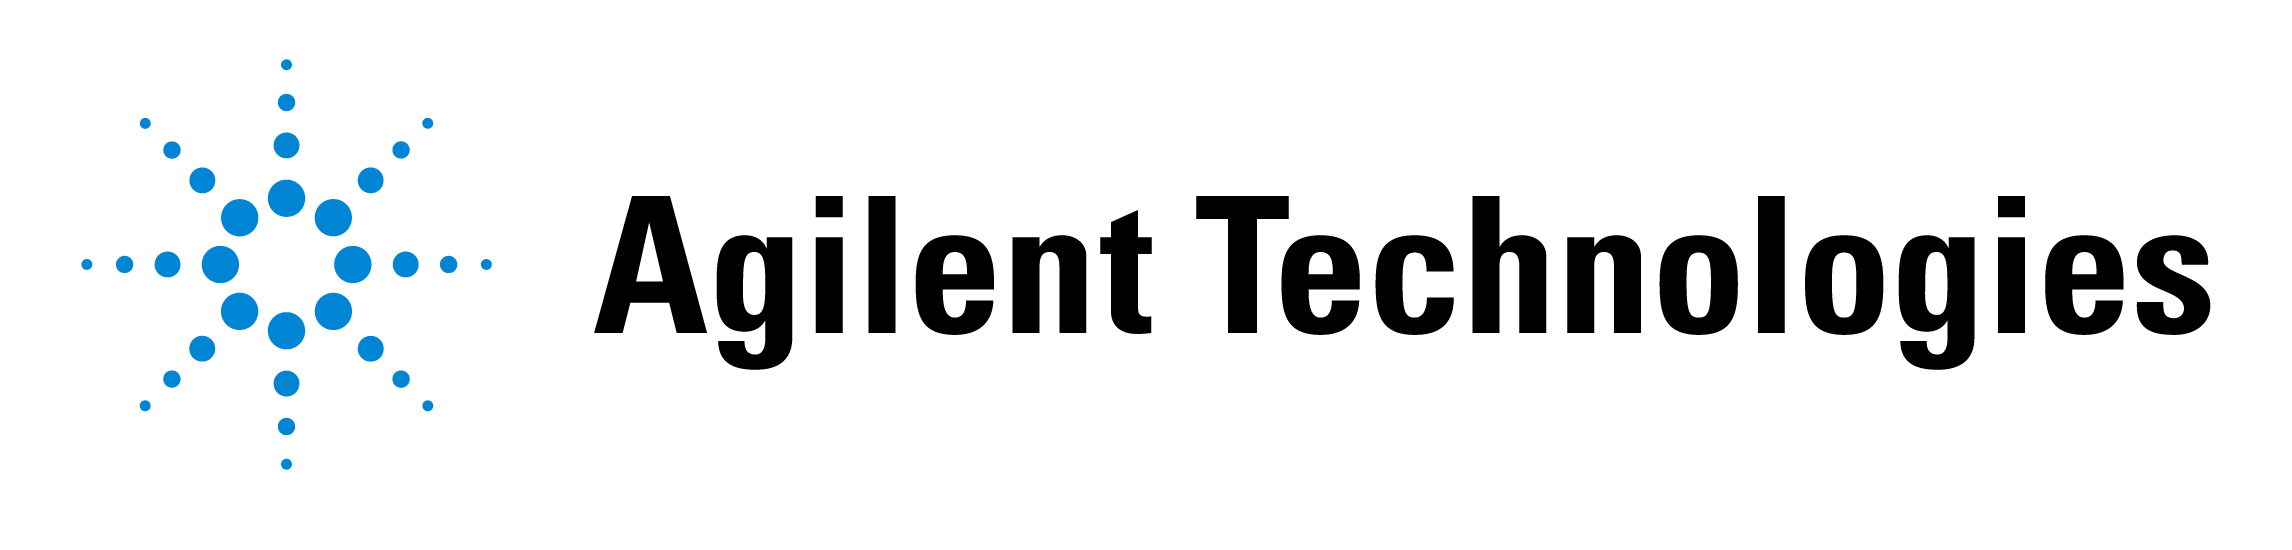 Aglient Technologies